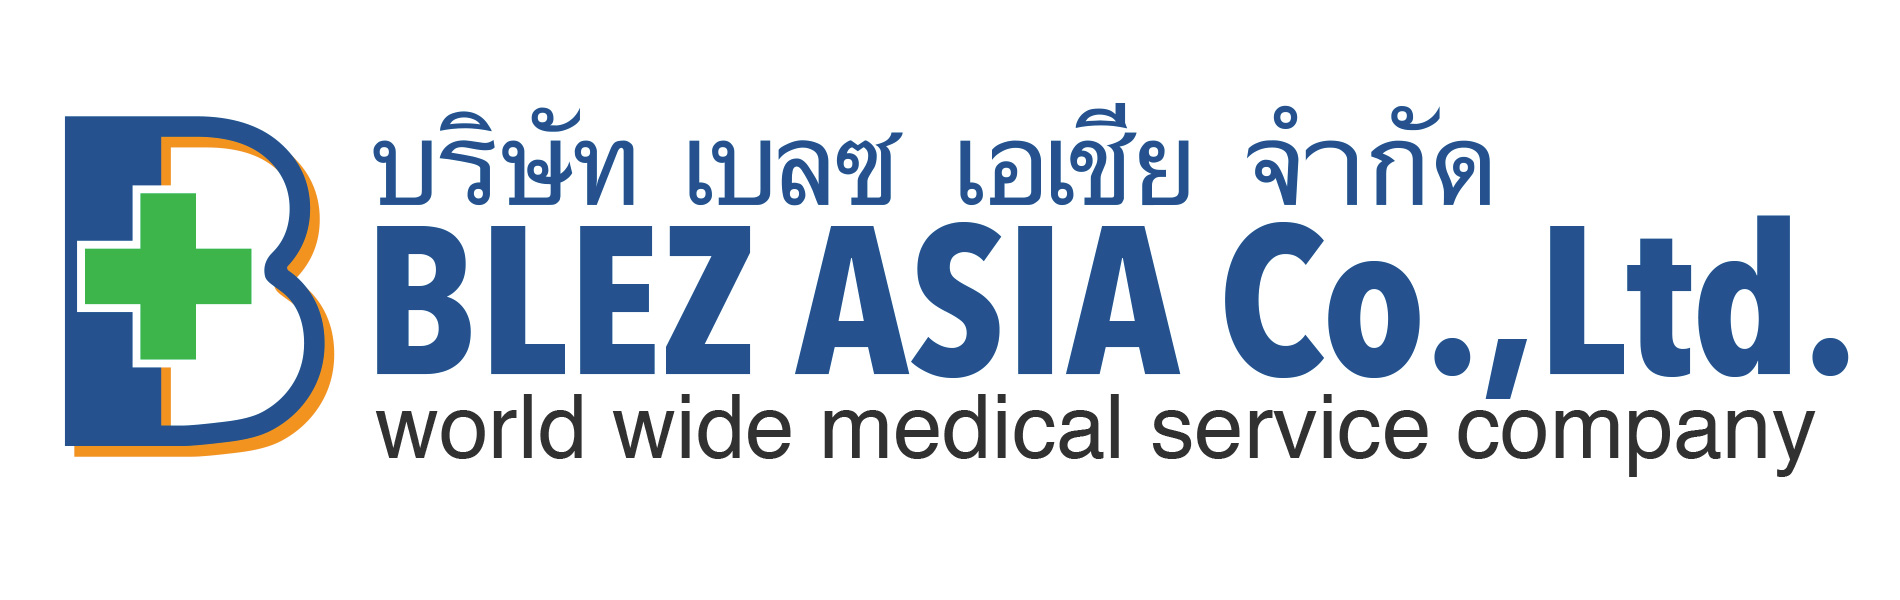 BLEZ ASIA Co., Ltd.